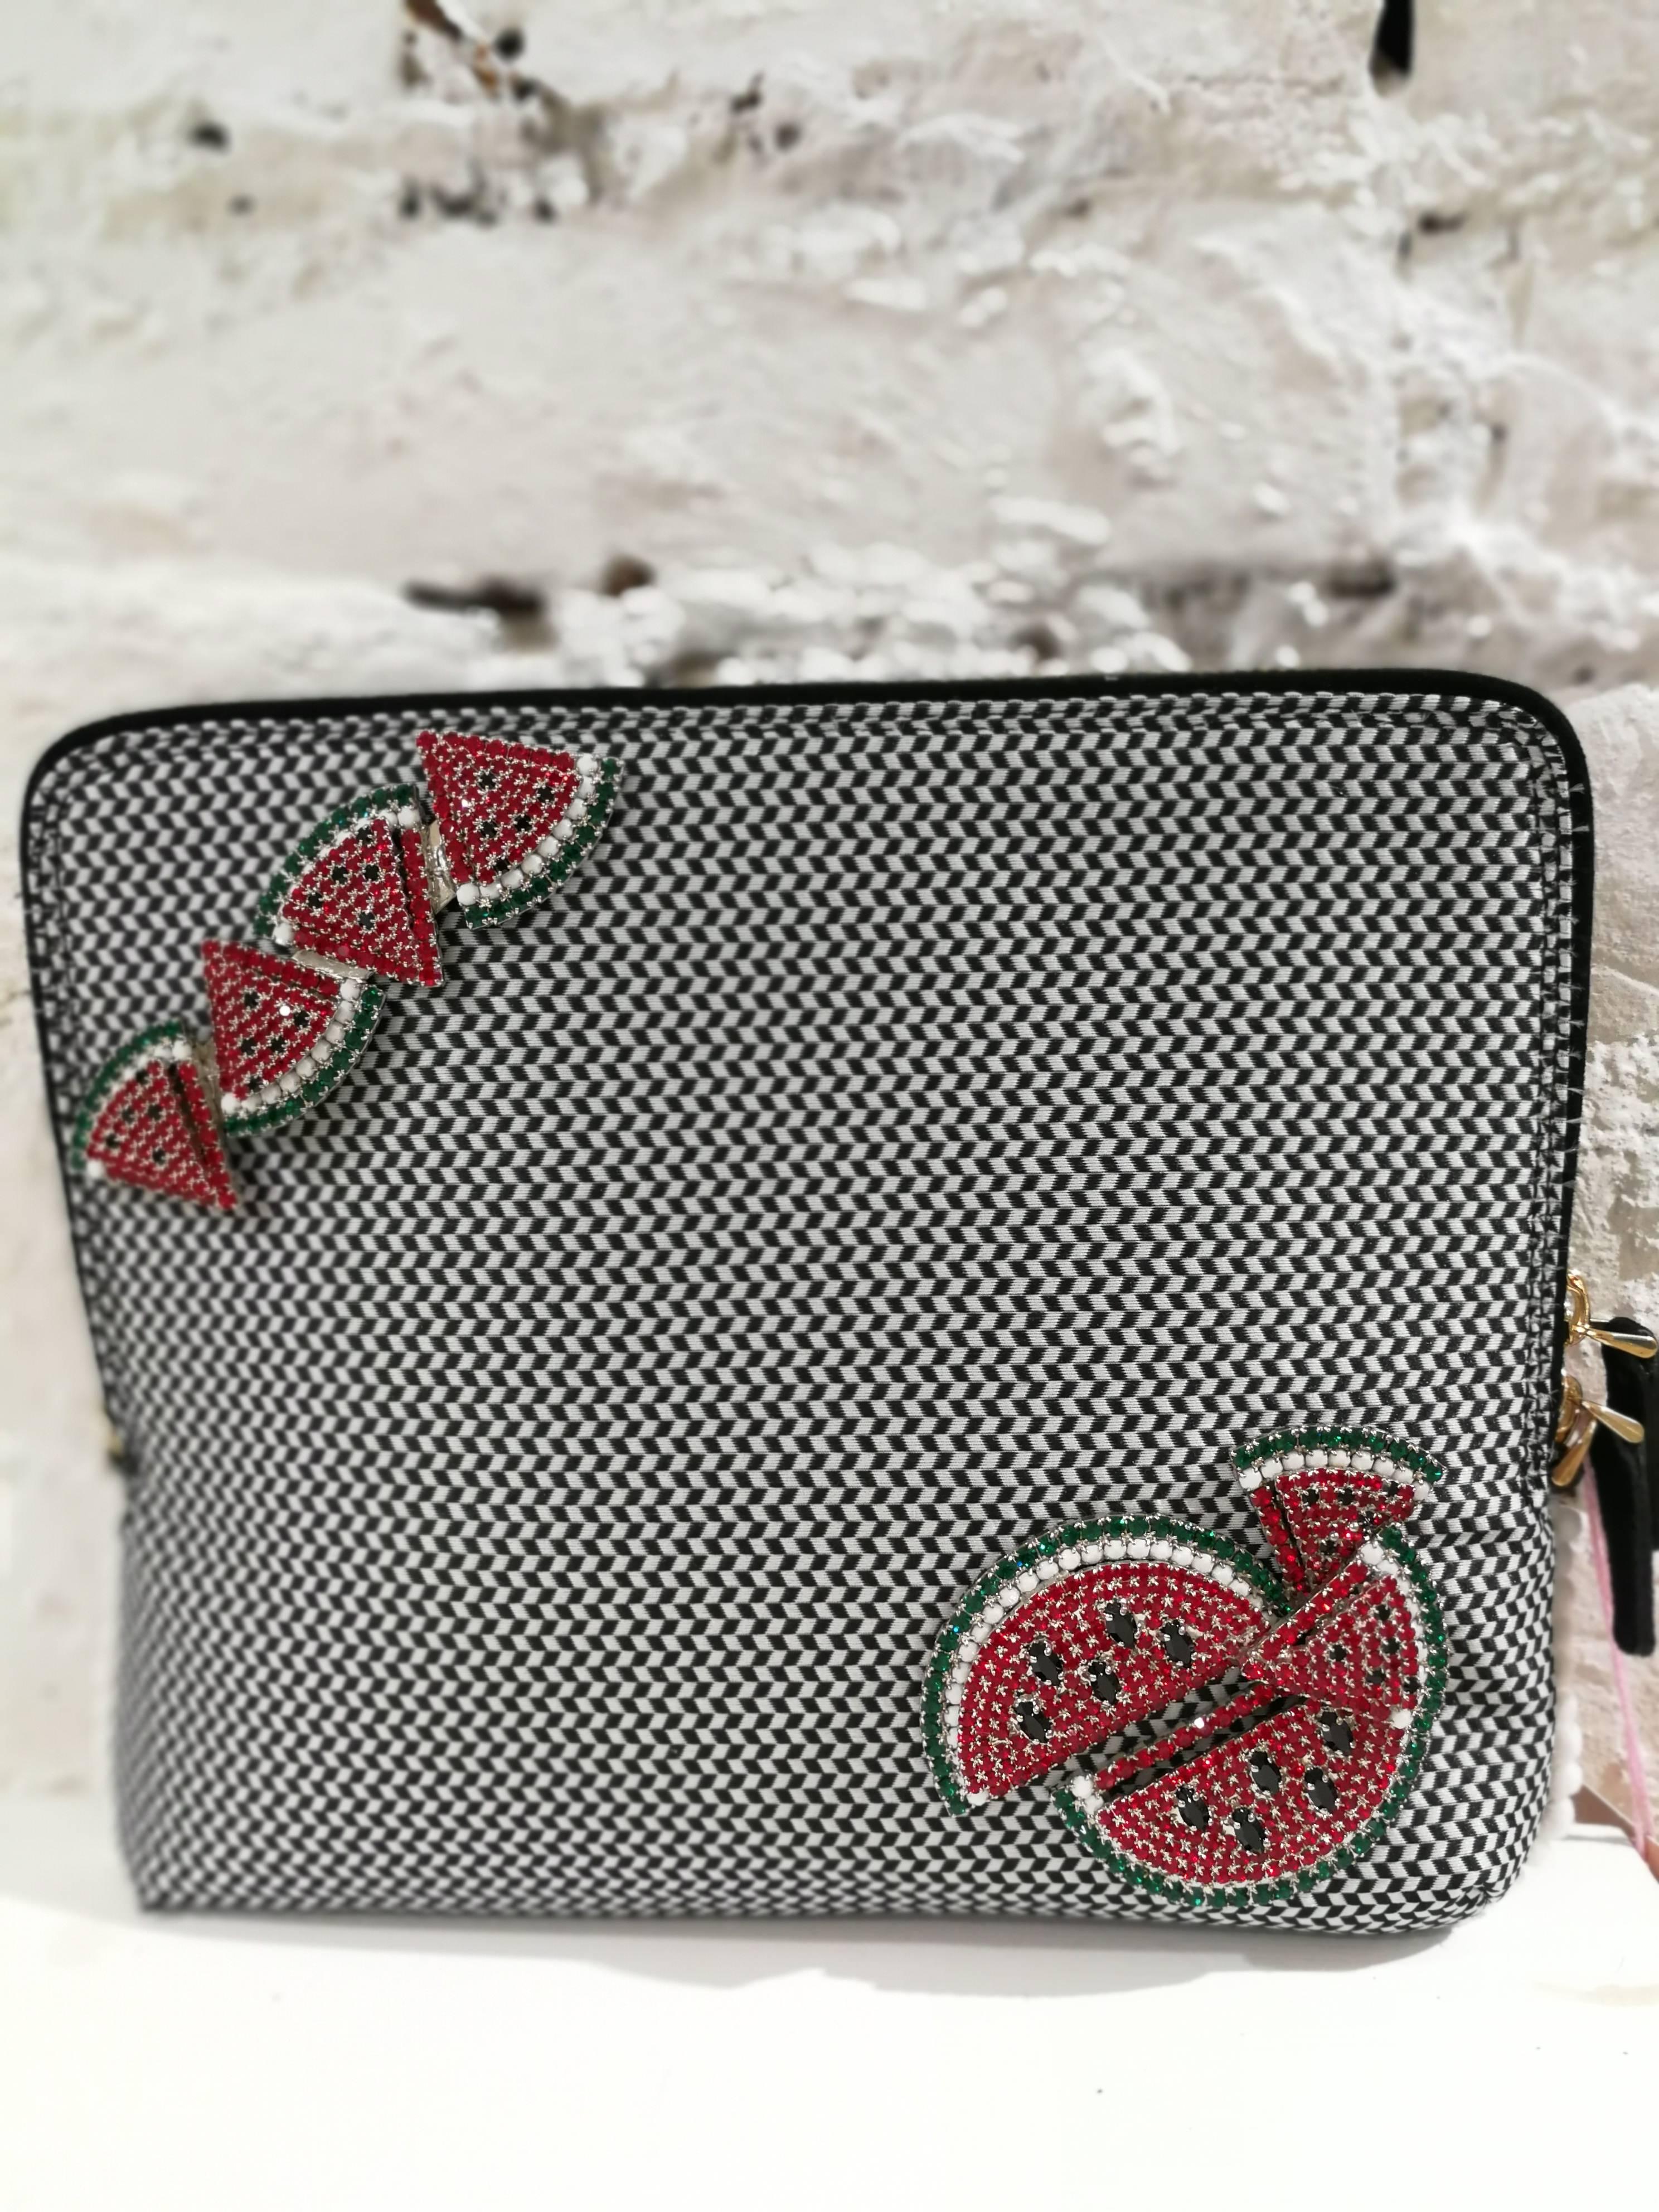 Lisa C. Bijoux Black and White Alice in Wonderland clutch shoulder bag

totally made in italy embellished with swarovski watermelon

MeasurementS: 23 x 19 cm

Shoulder strap: 118 cm